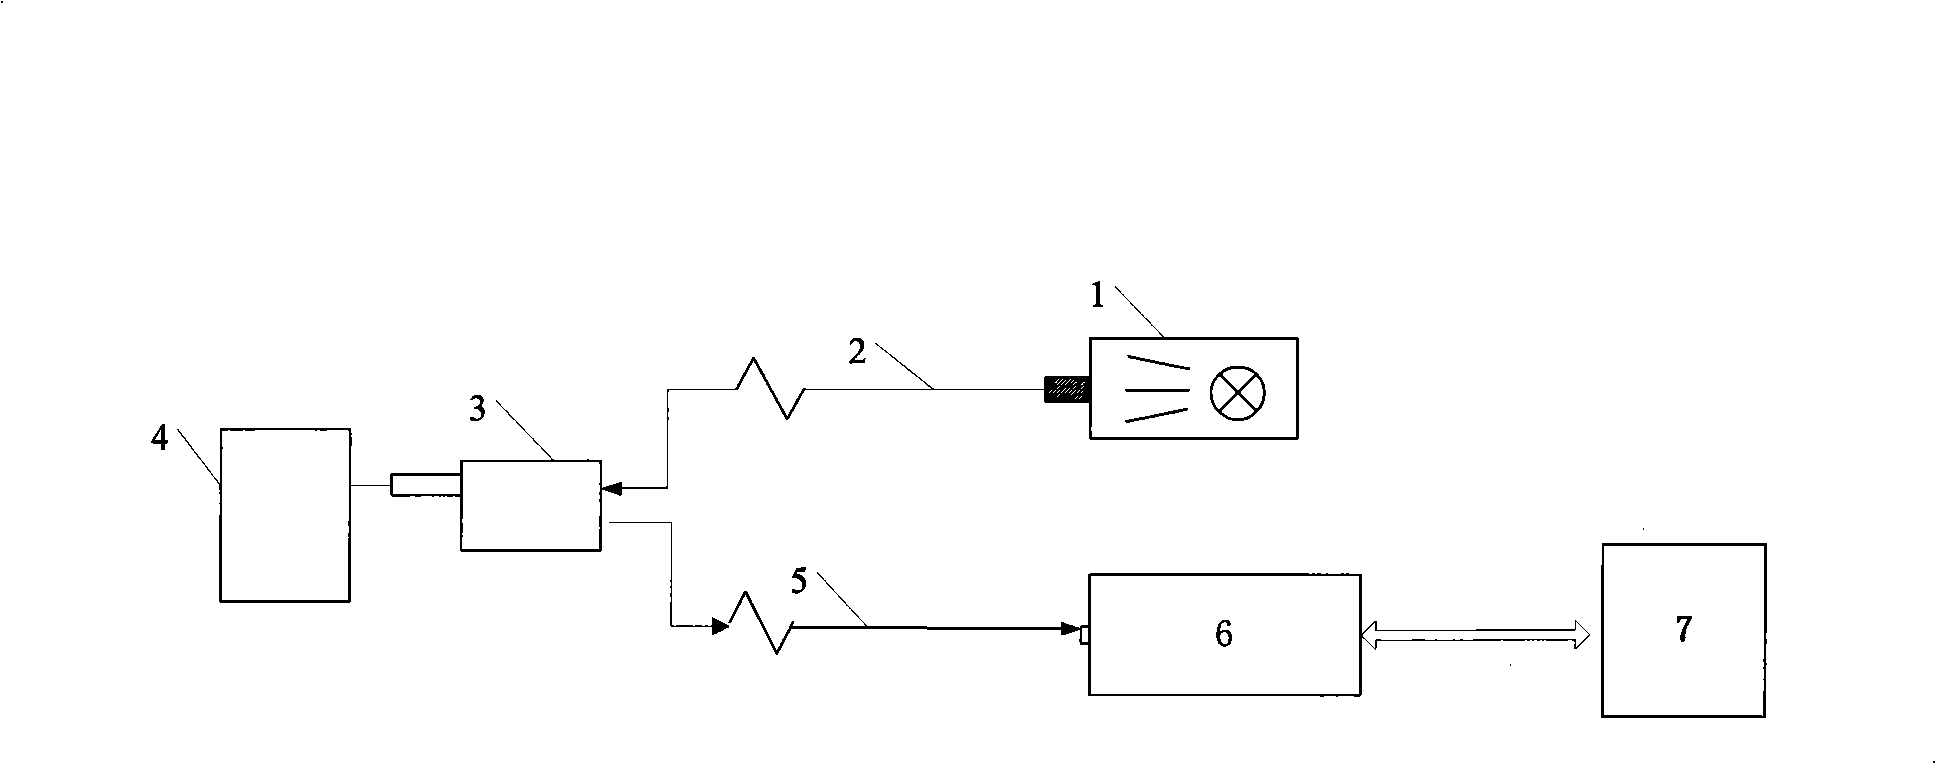 Method for measuring gasoline olefin content based on Raman spectrum